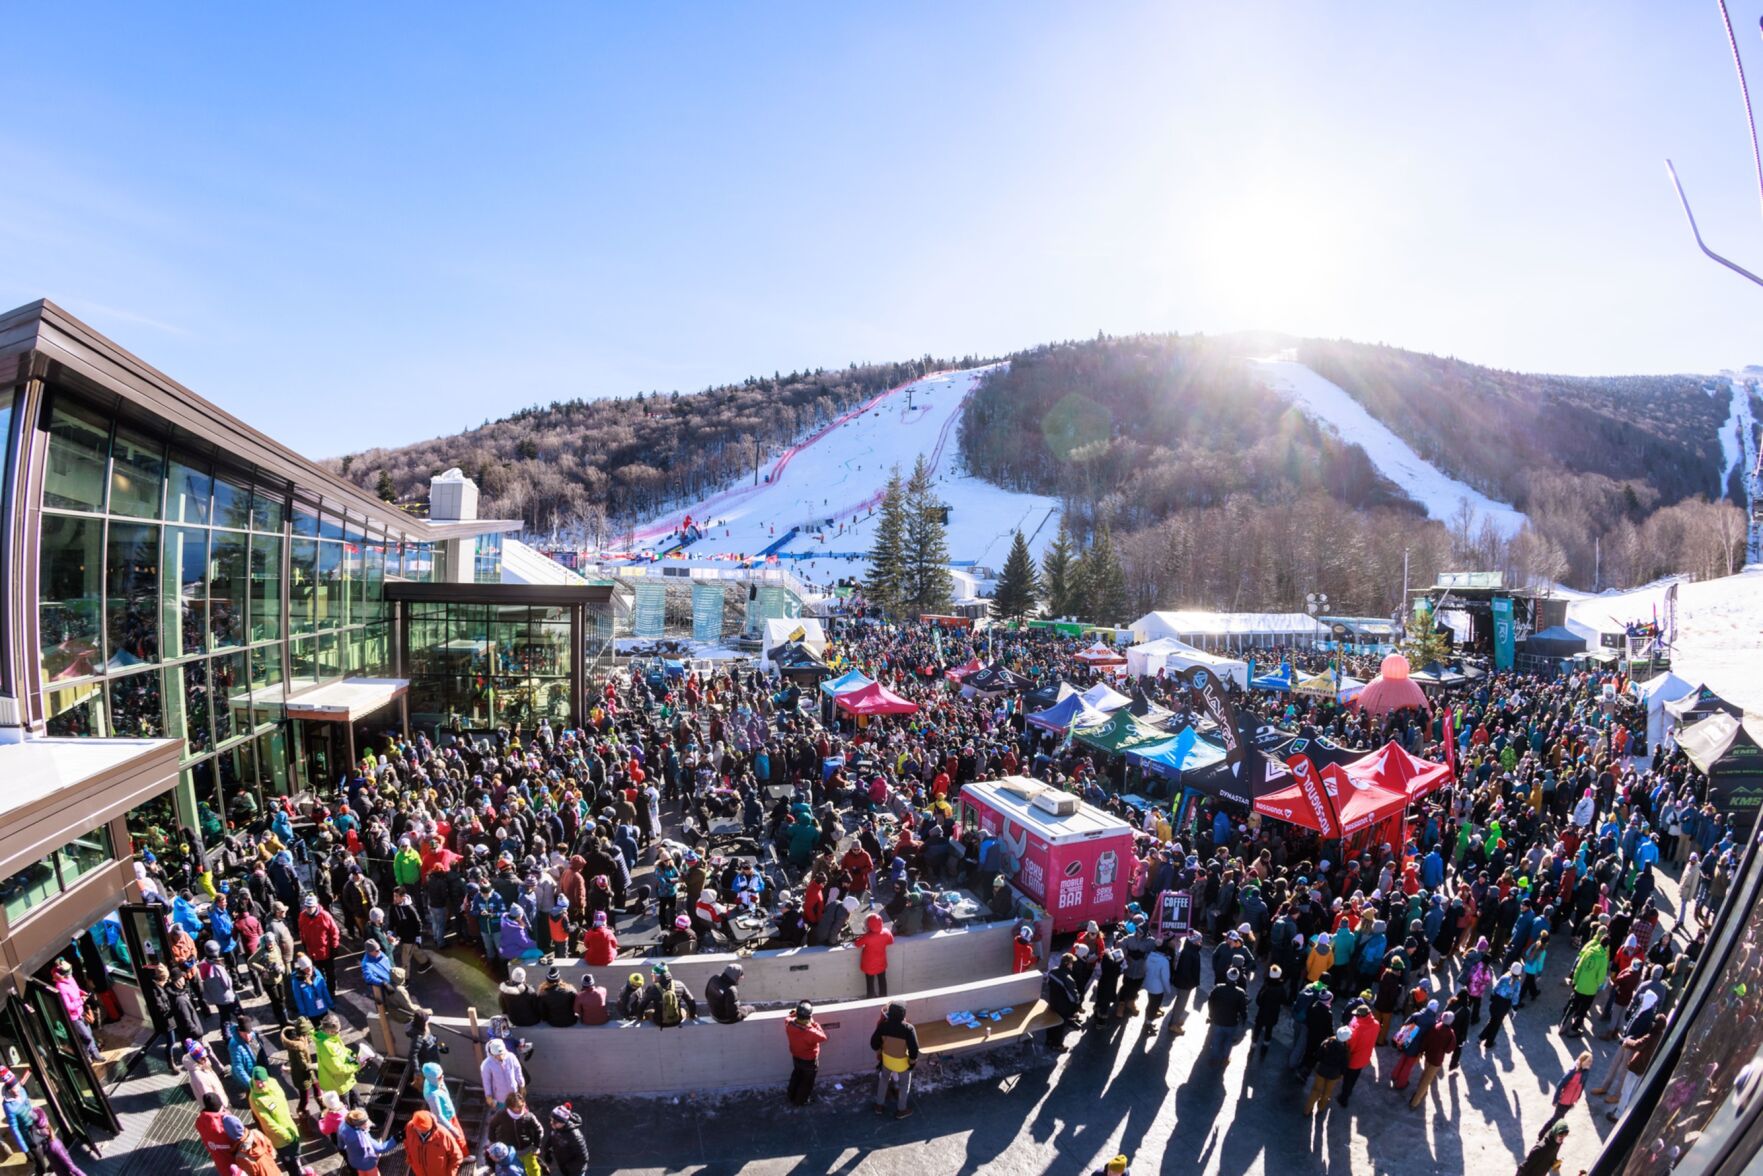 Massive crowds flock to Killington for Ski World Cup Sports pressrepublican